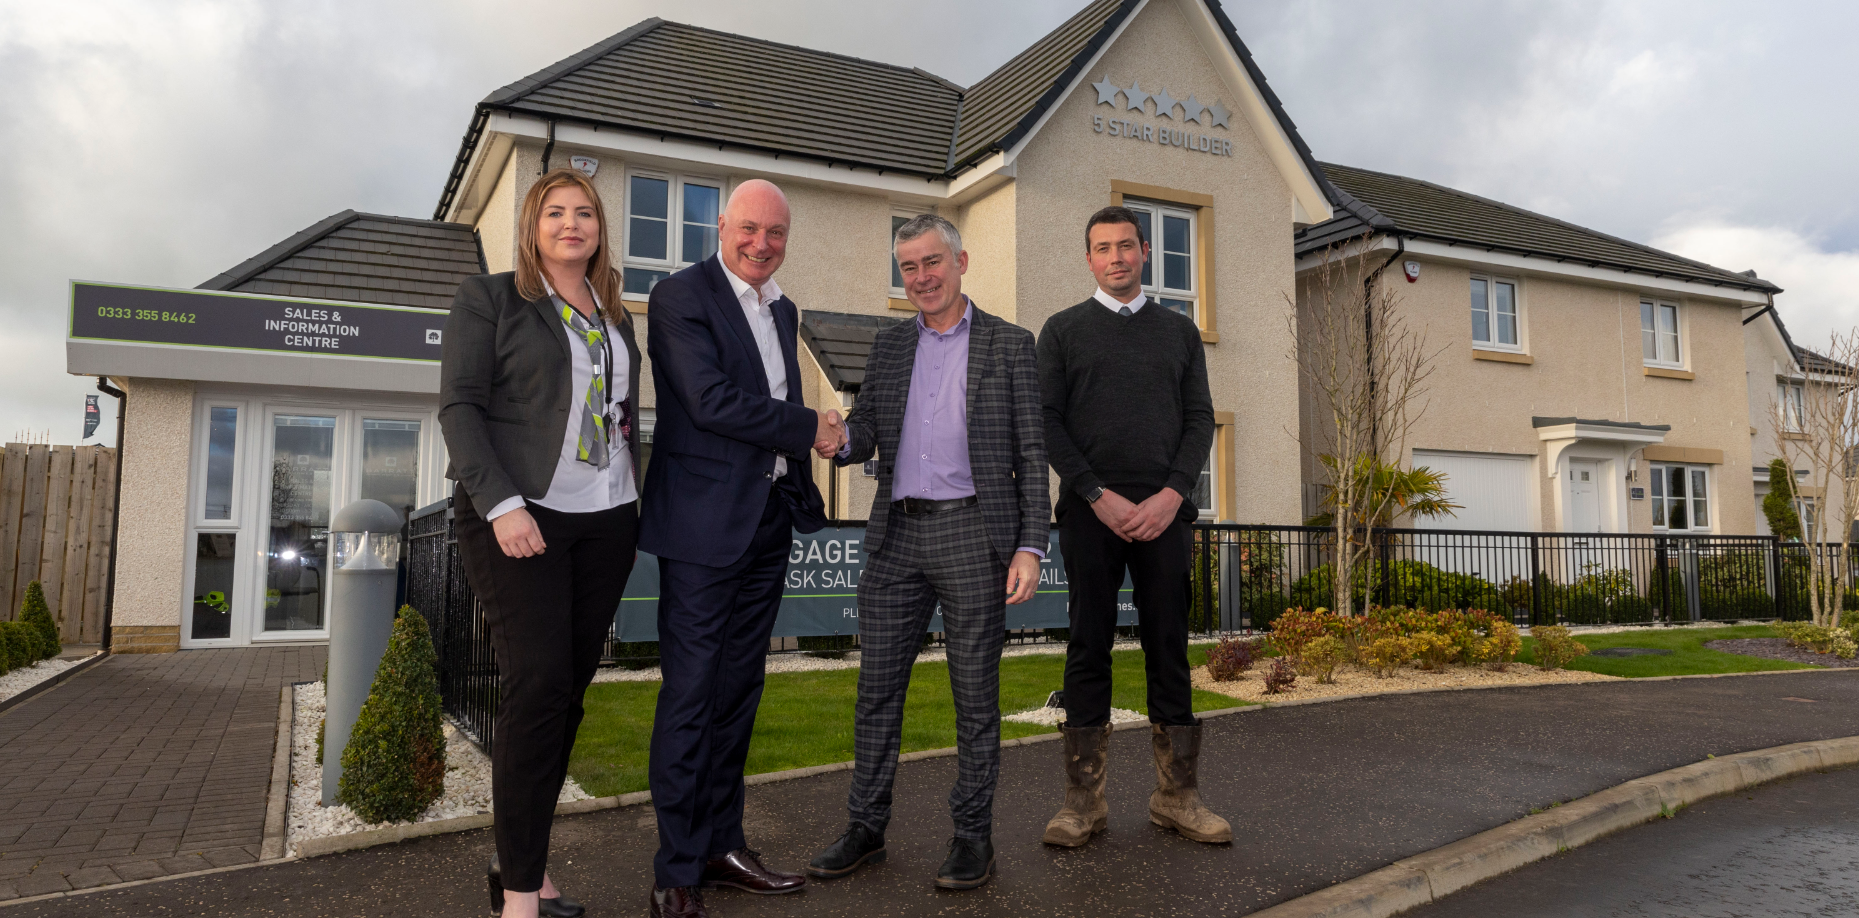 Barratt welcomes Kilmarnock MP to Lairds Brae development